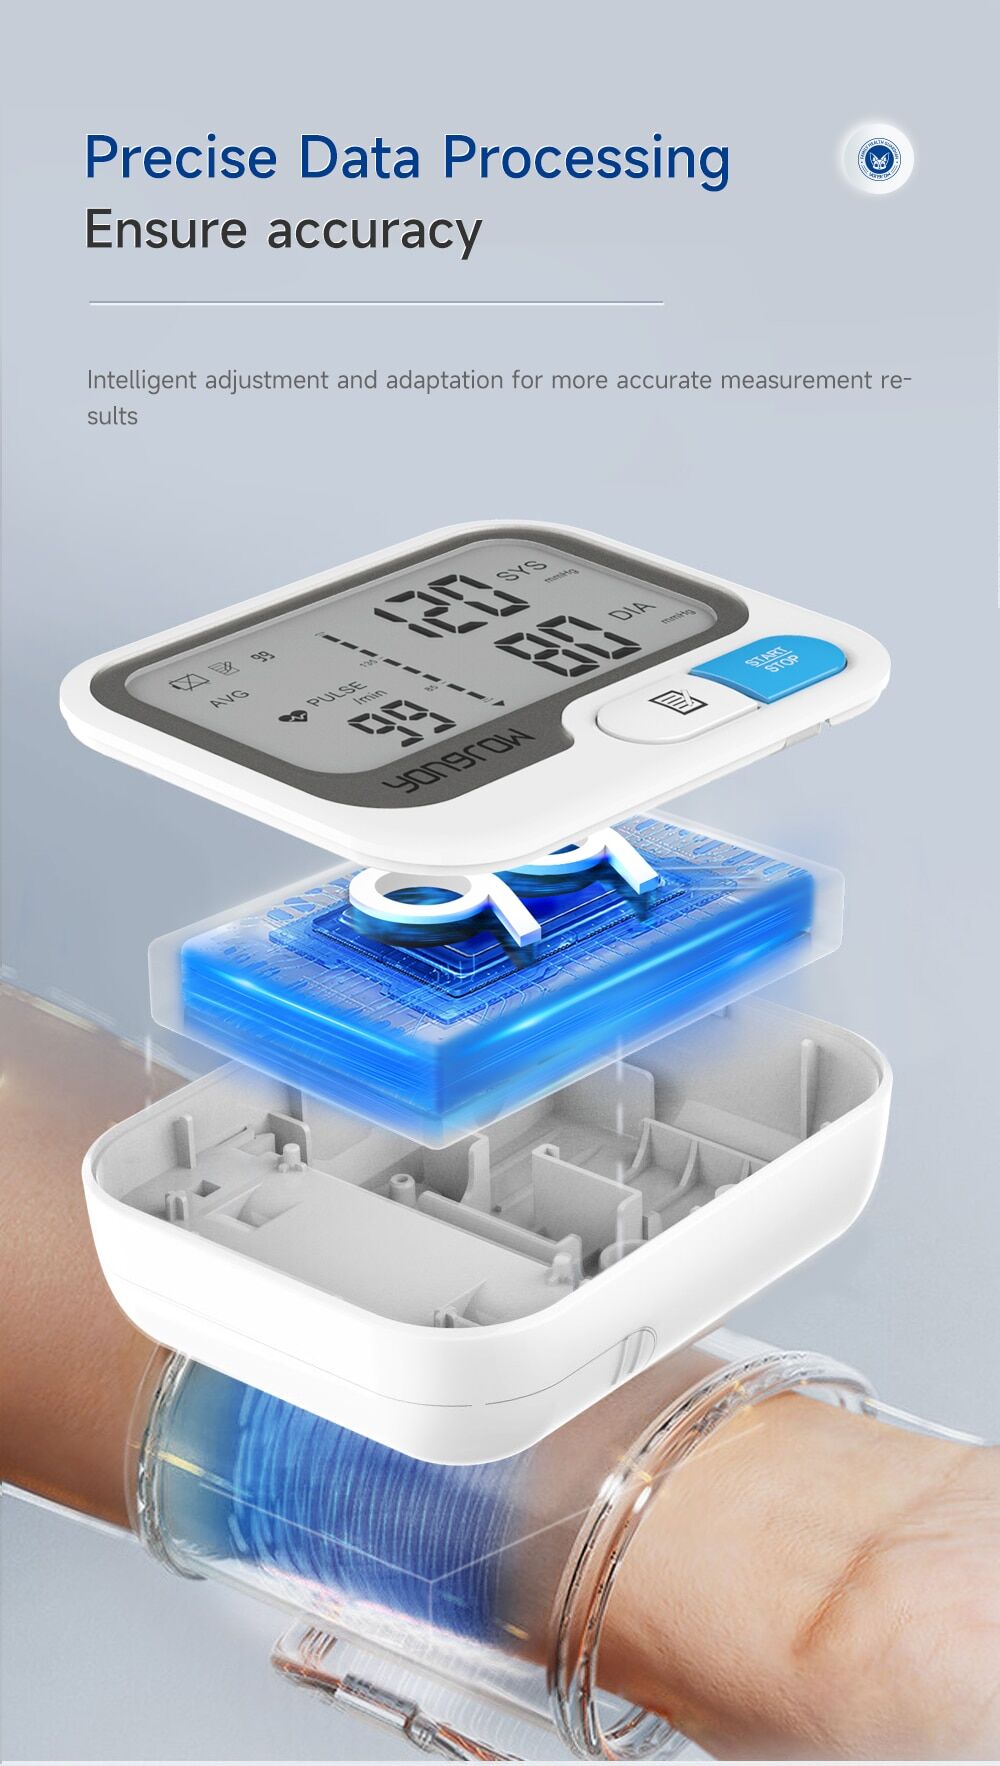 Digital wrist blood pressure monitor Yongrow YK-BPW5 € 35,00